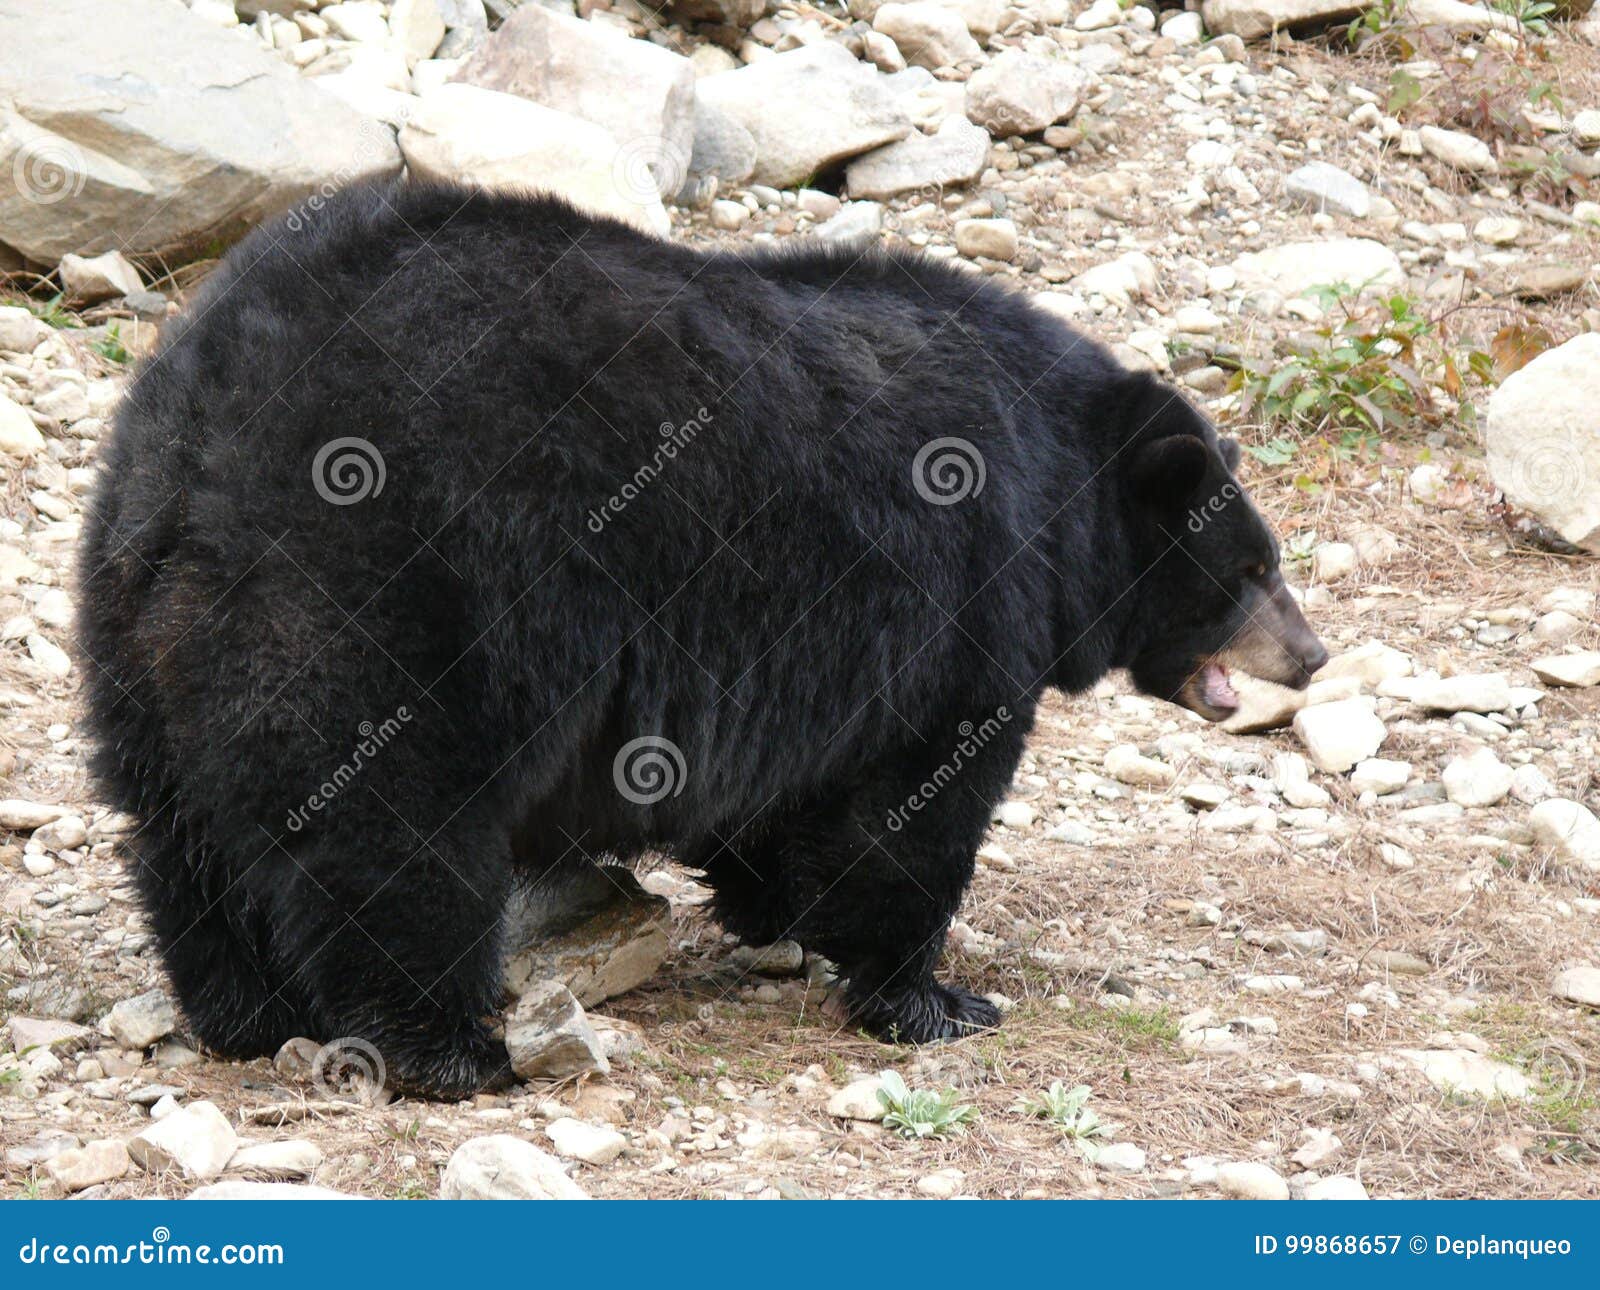 bear in quebec. canada, north america.